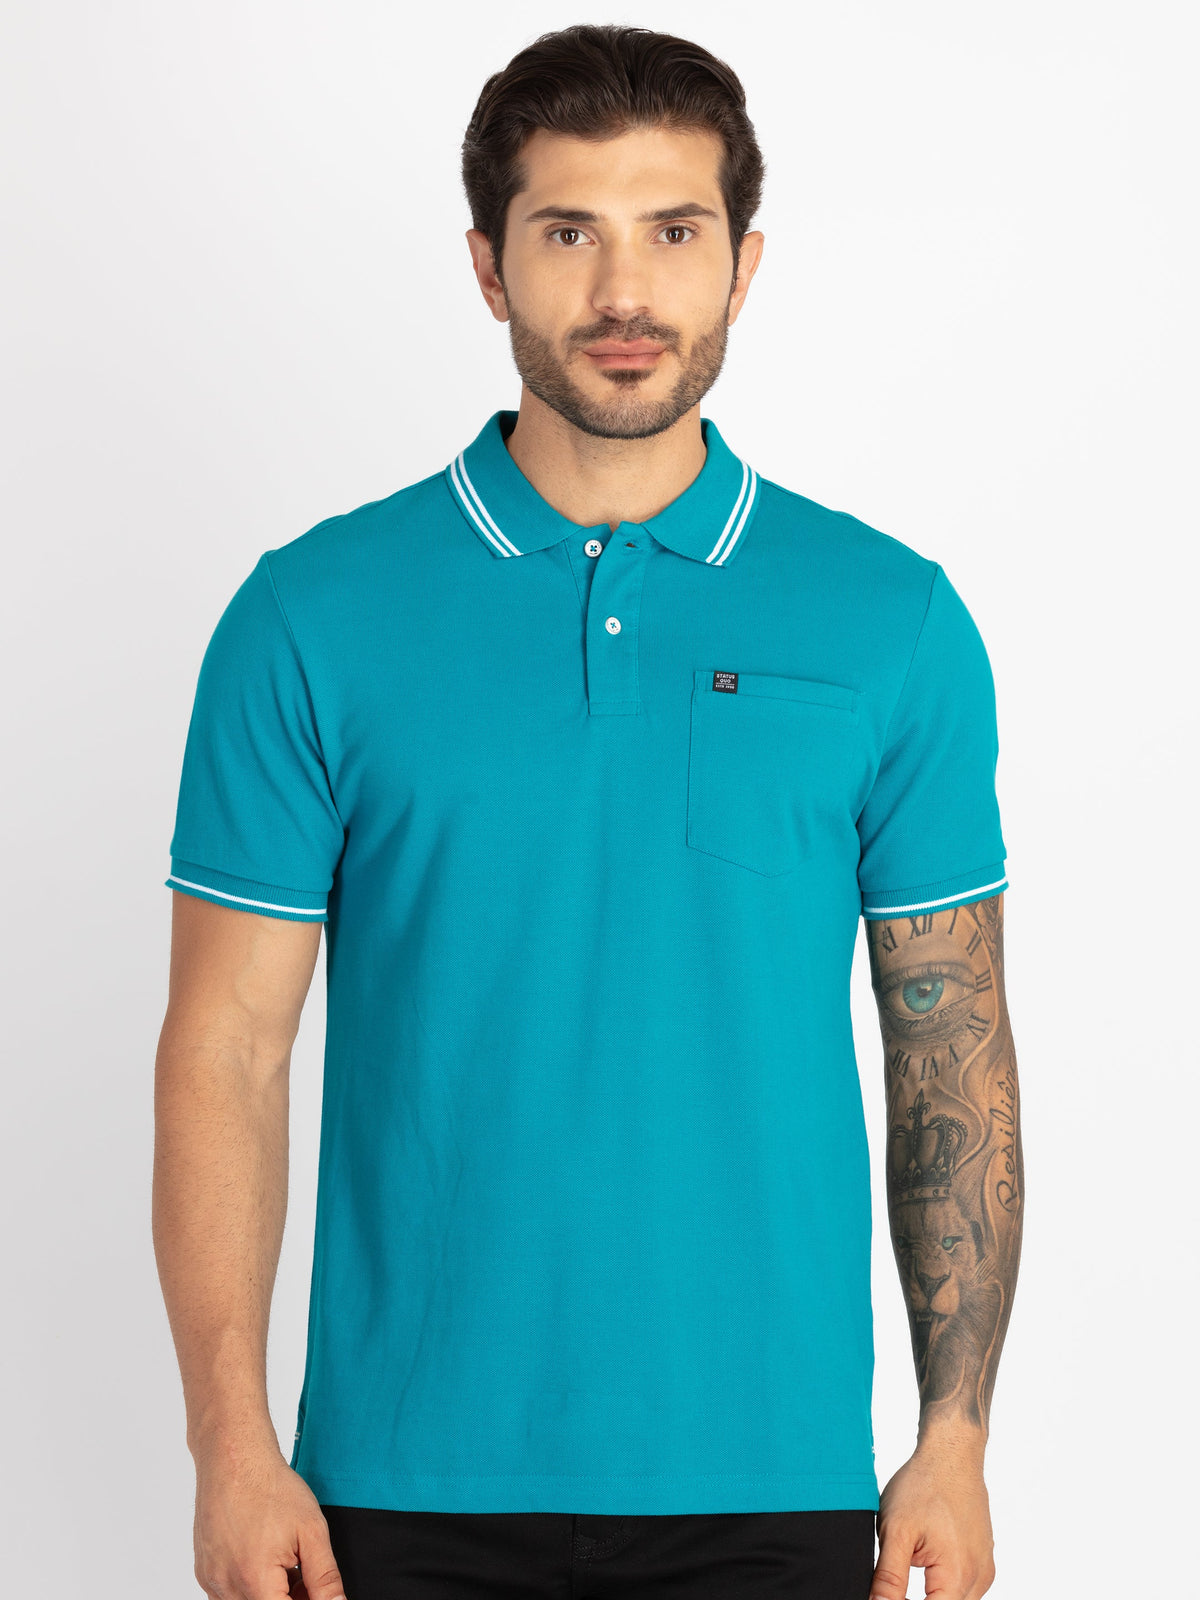 Status Quo |Men's Polo T-shirt - S, M, L, XL, XXL